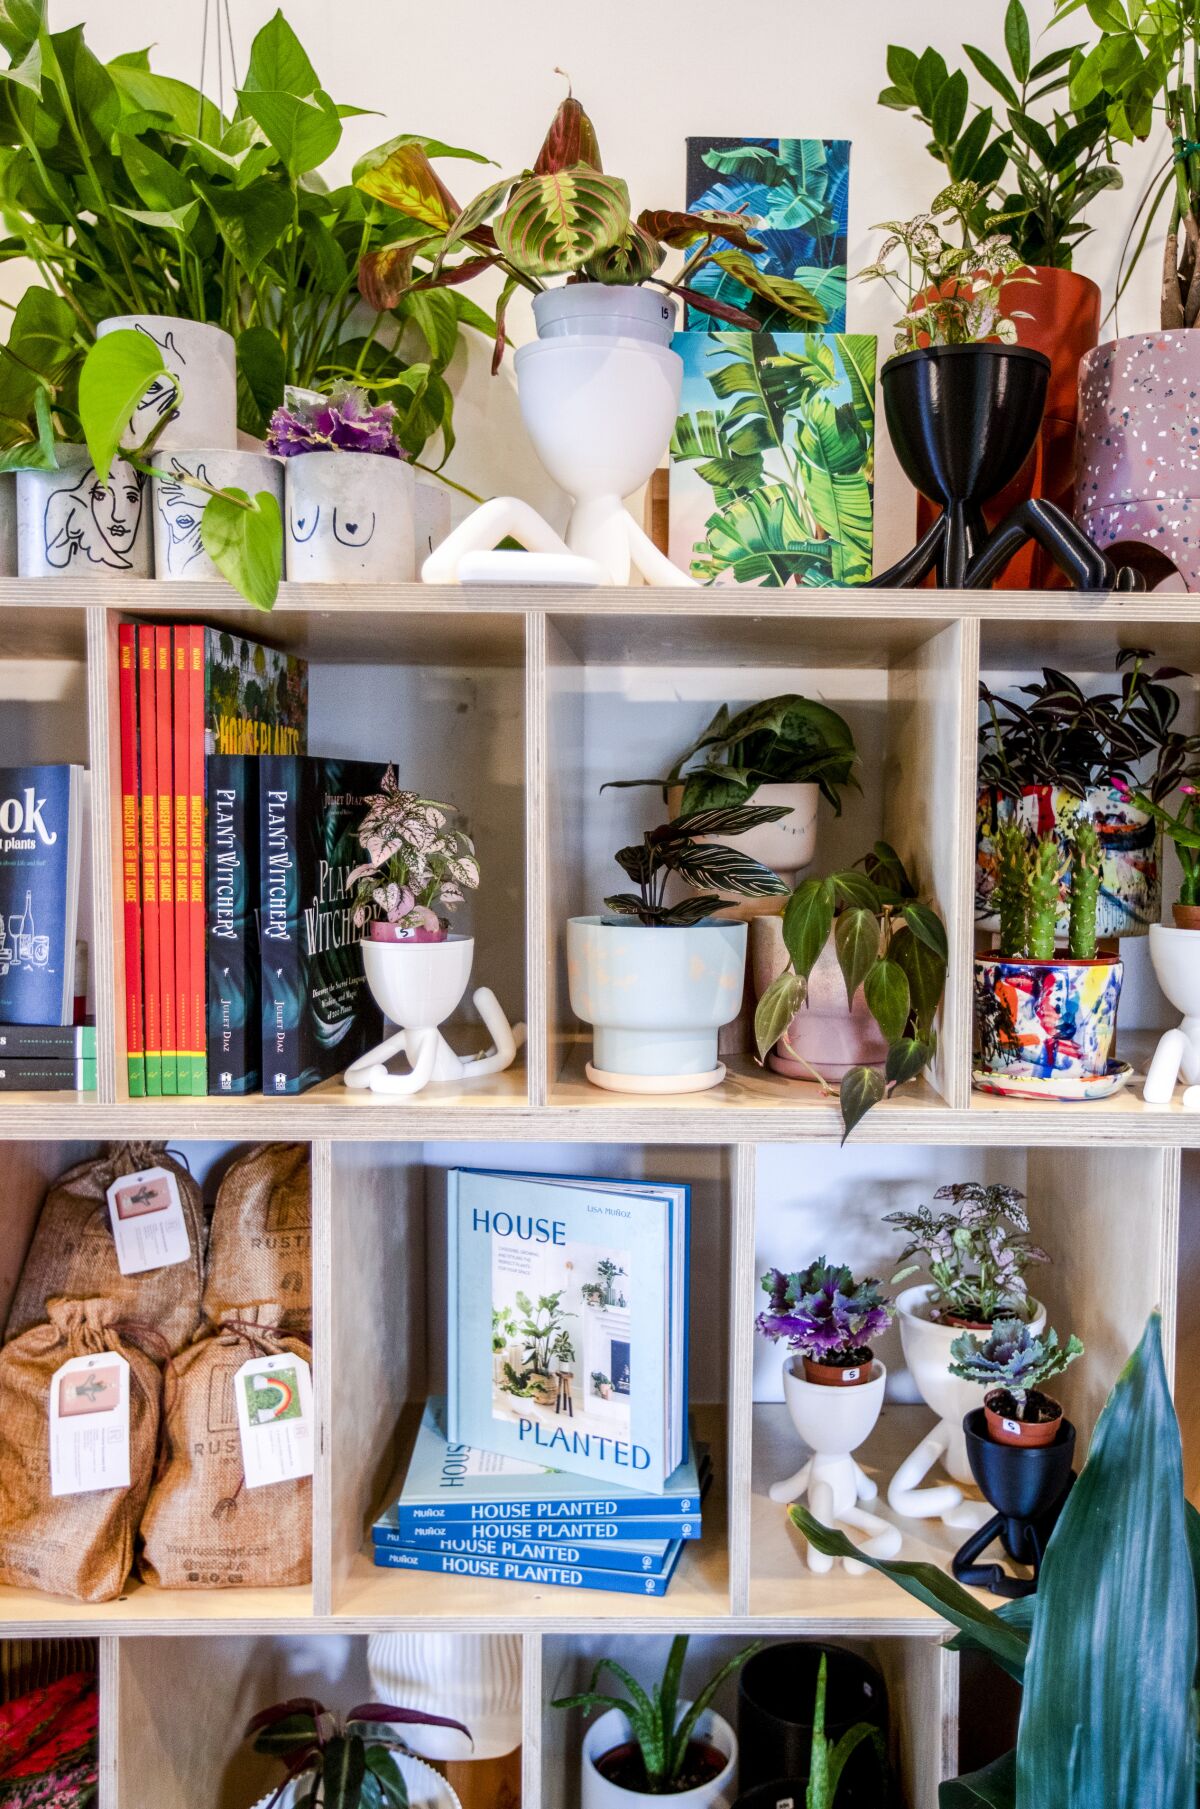 Shelves hold books, plants and botanically inspired goods.